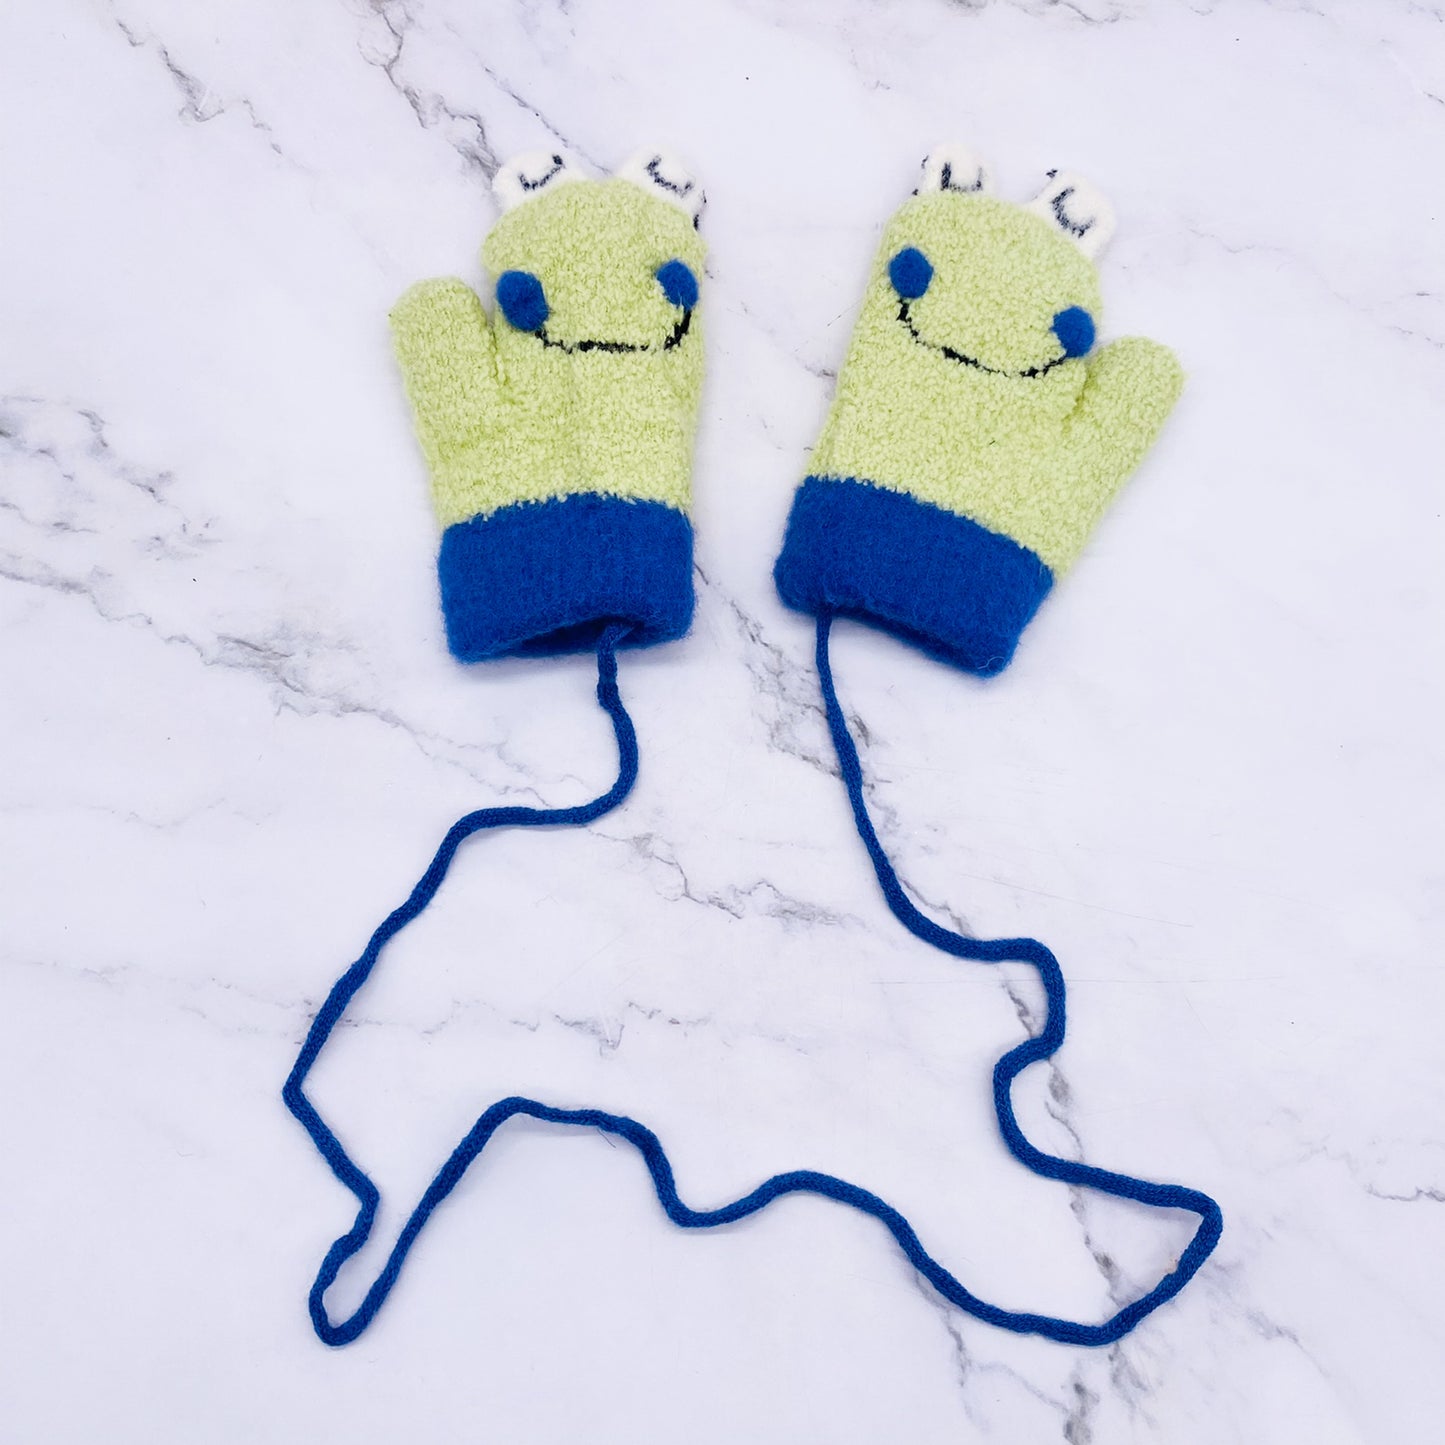 Frog Design Knitted Unisex Kids Mittens